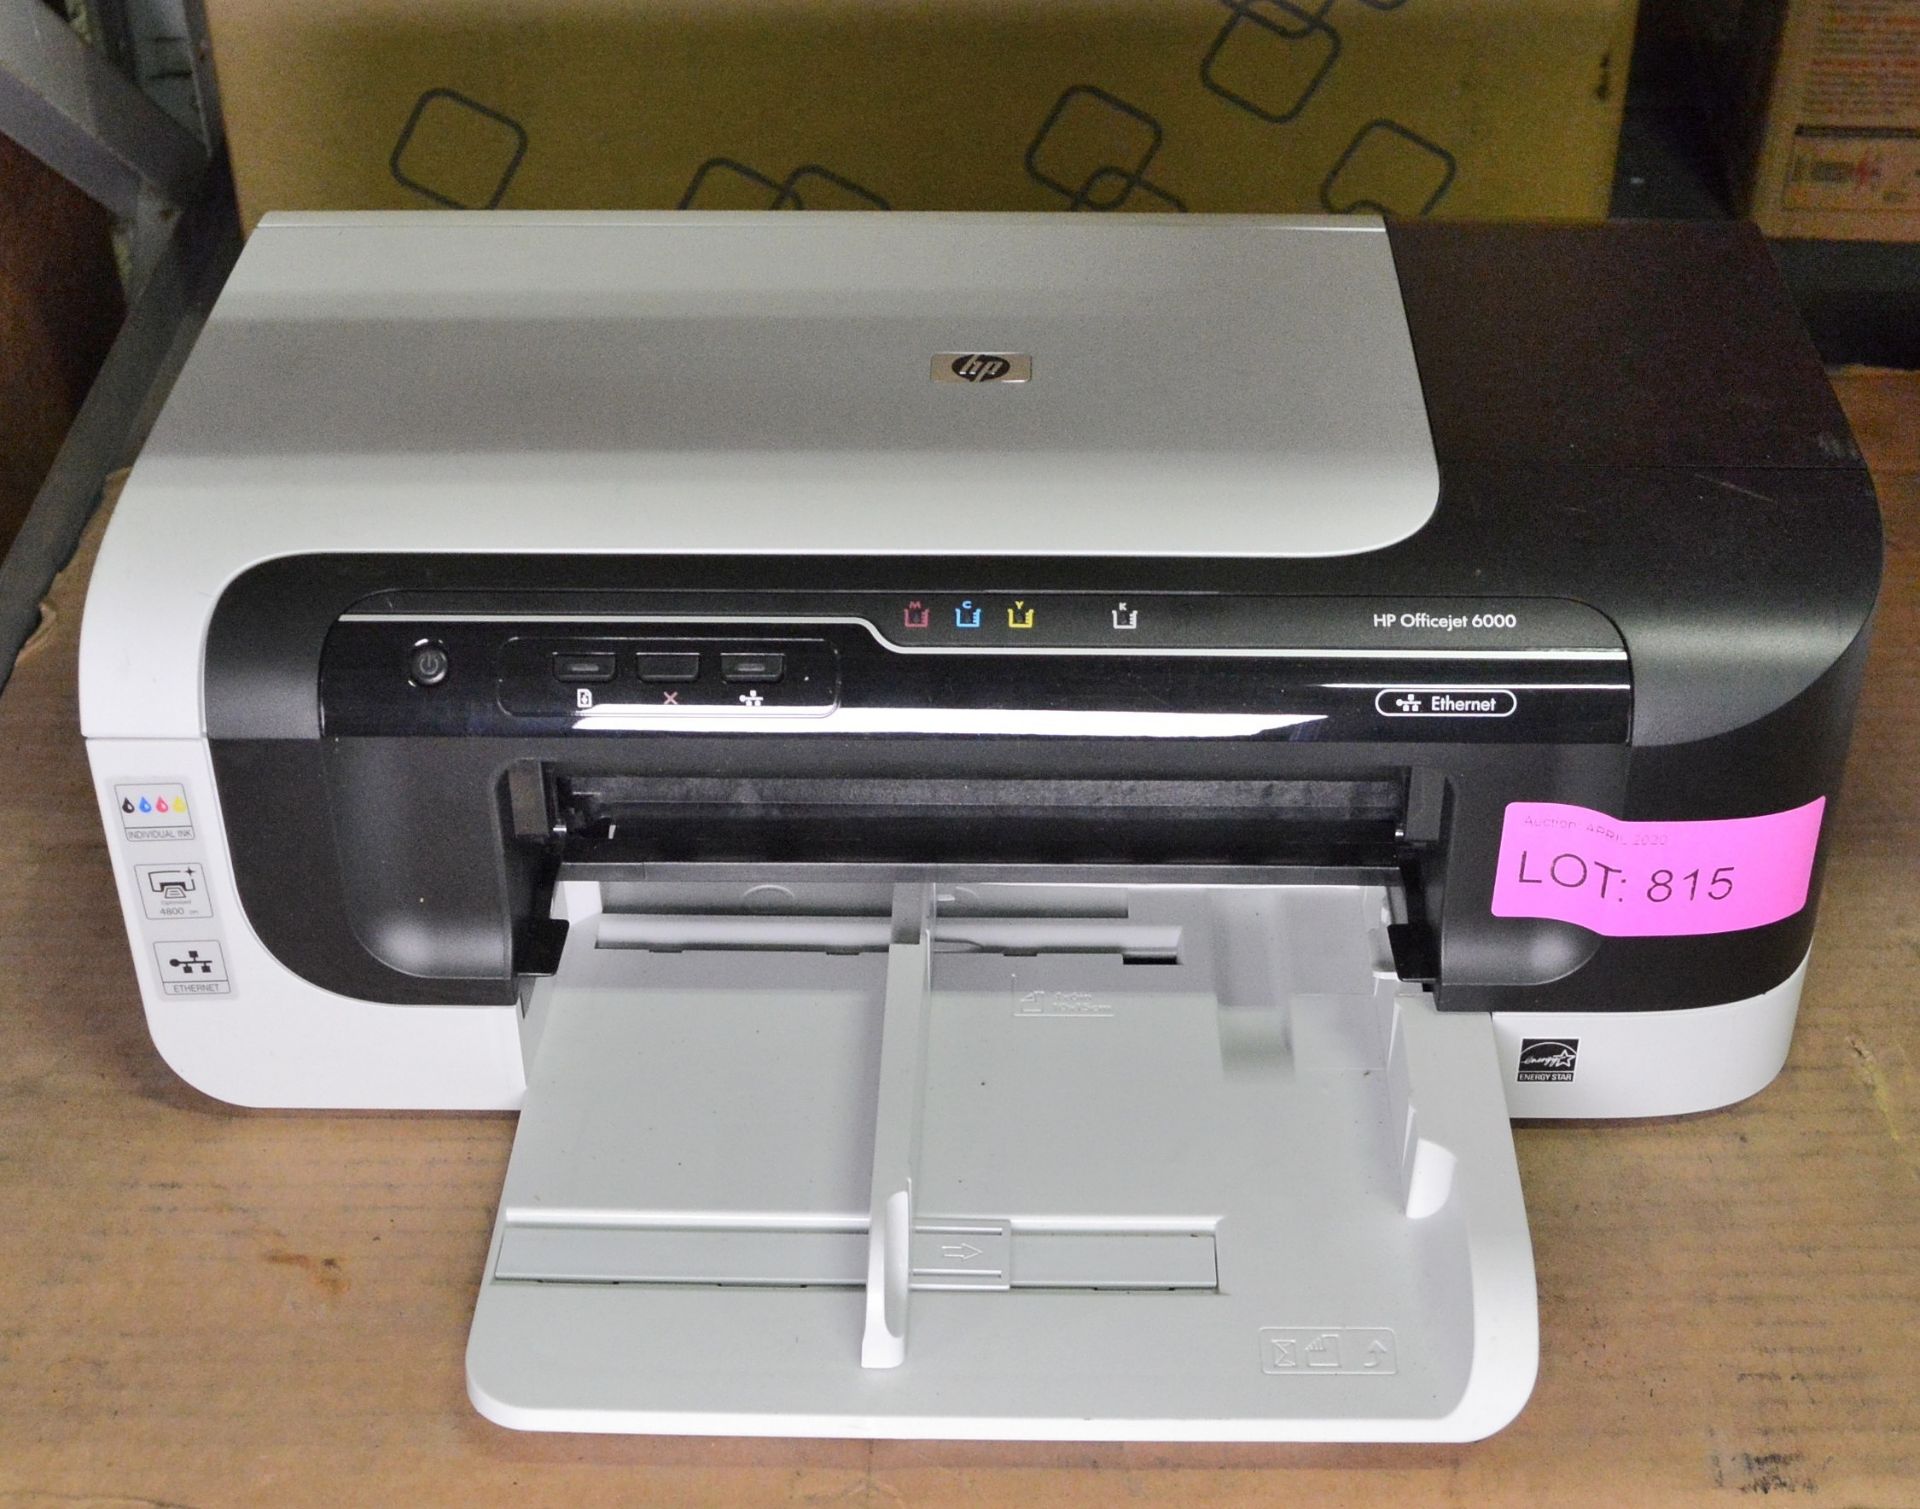 SZA 20664 HP Officejet 6000 Printer.